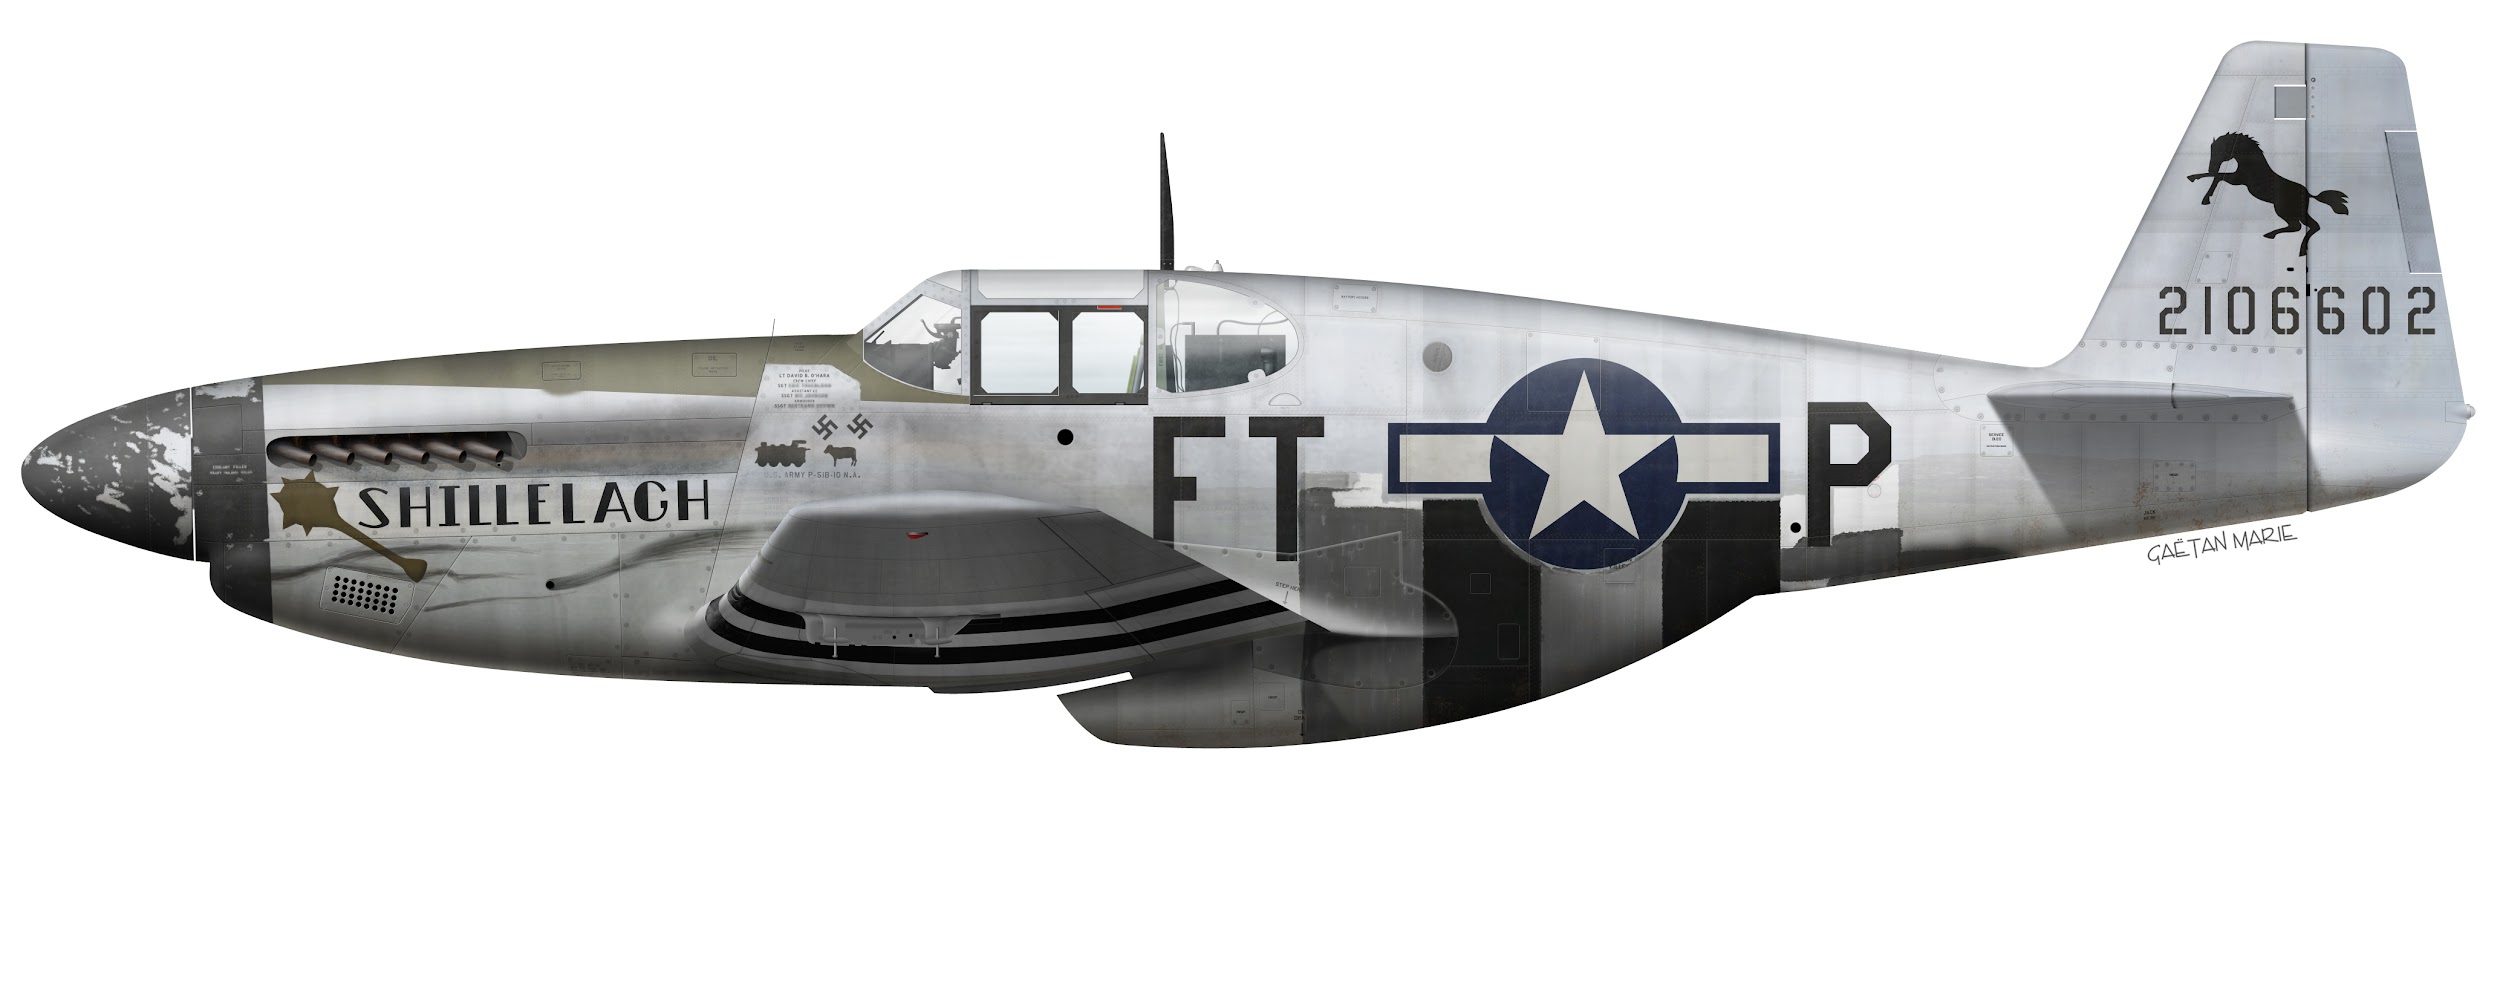 P-51B Shillelaugh - Update